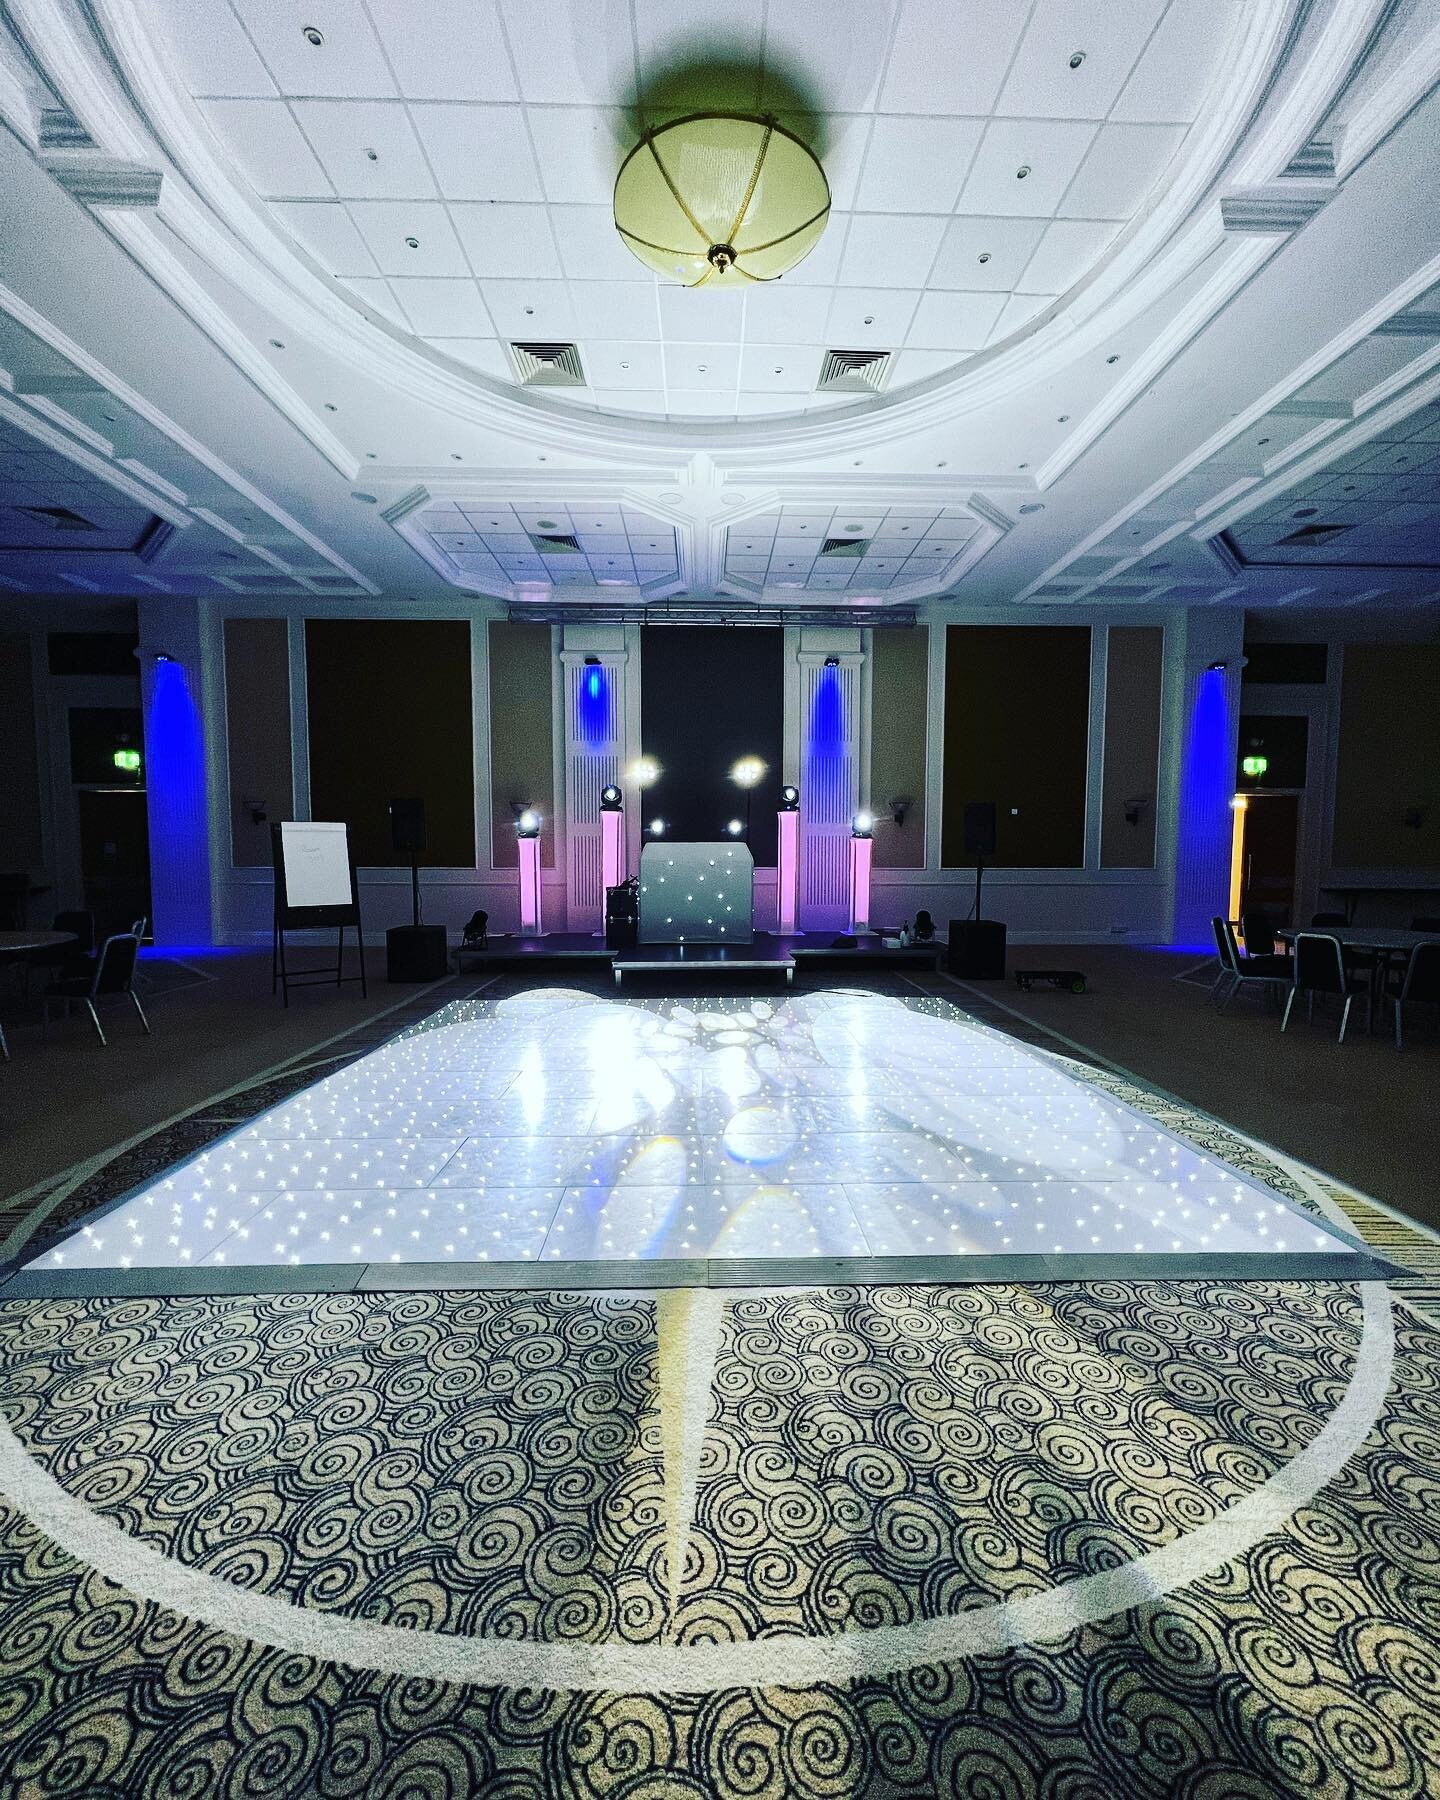 Dance floor and full rig looking stunning at @crowneplazaplymouth #djlife #mobiledj #mobiledjsetup #mobiledjservice #ev #americandj #americandjlighting #timelapse #weddingdj #devondj #plymouthdj #disco #wedding #dmxlihhting #dancefoor #leddancefloor 